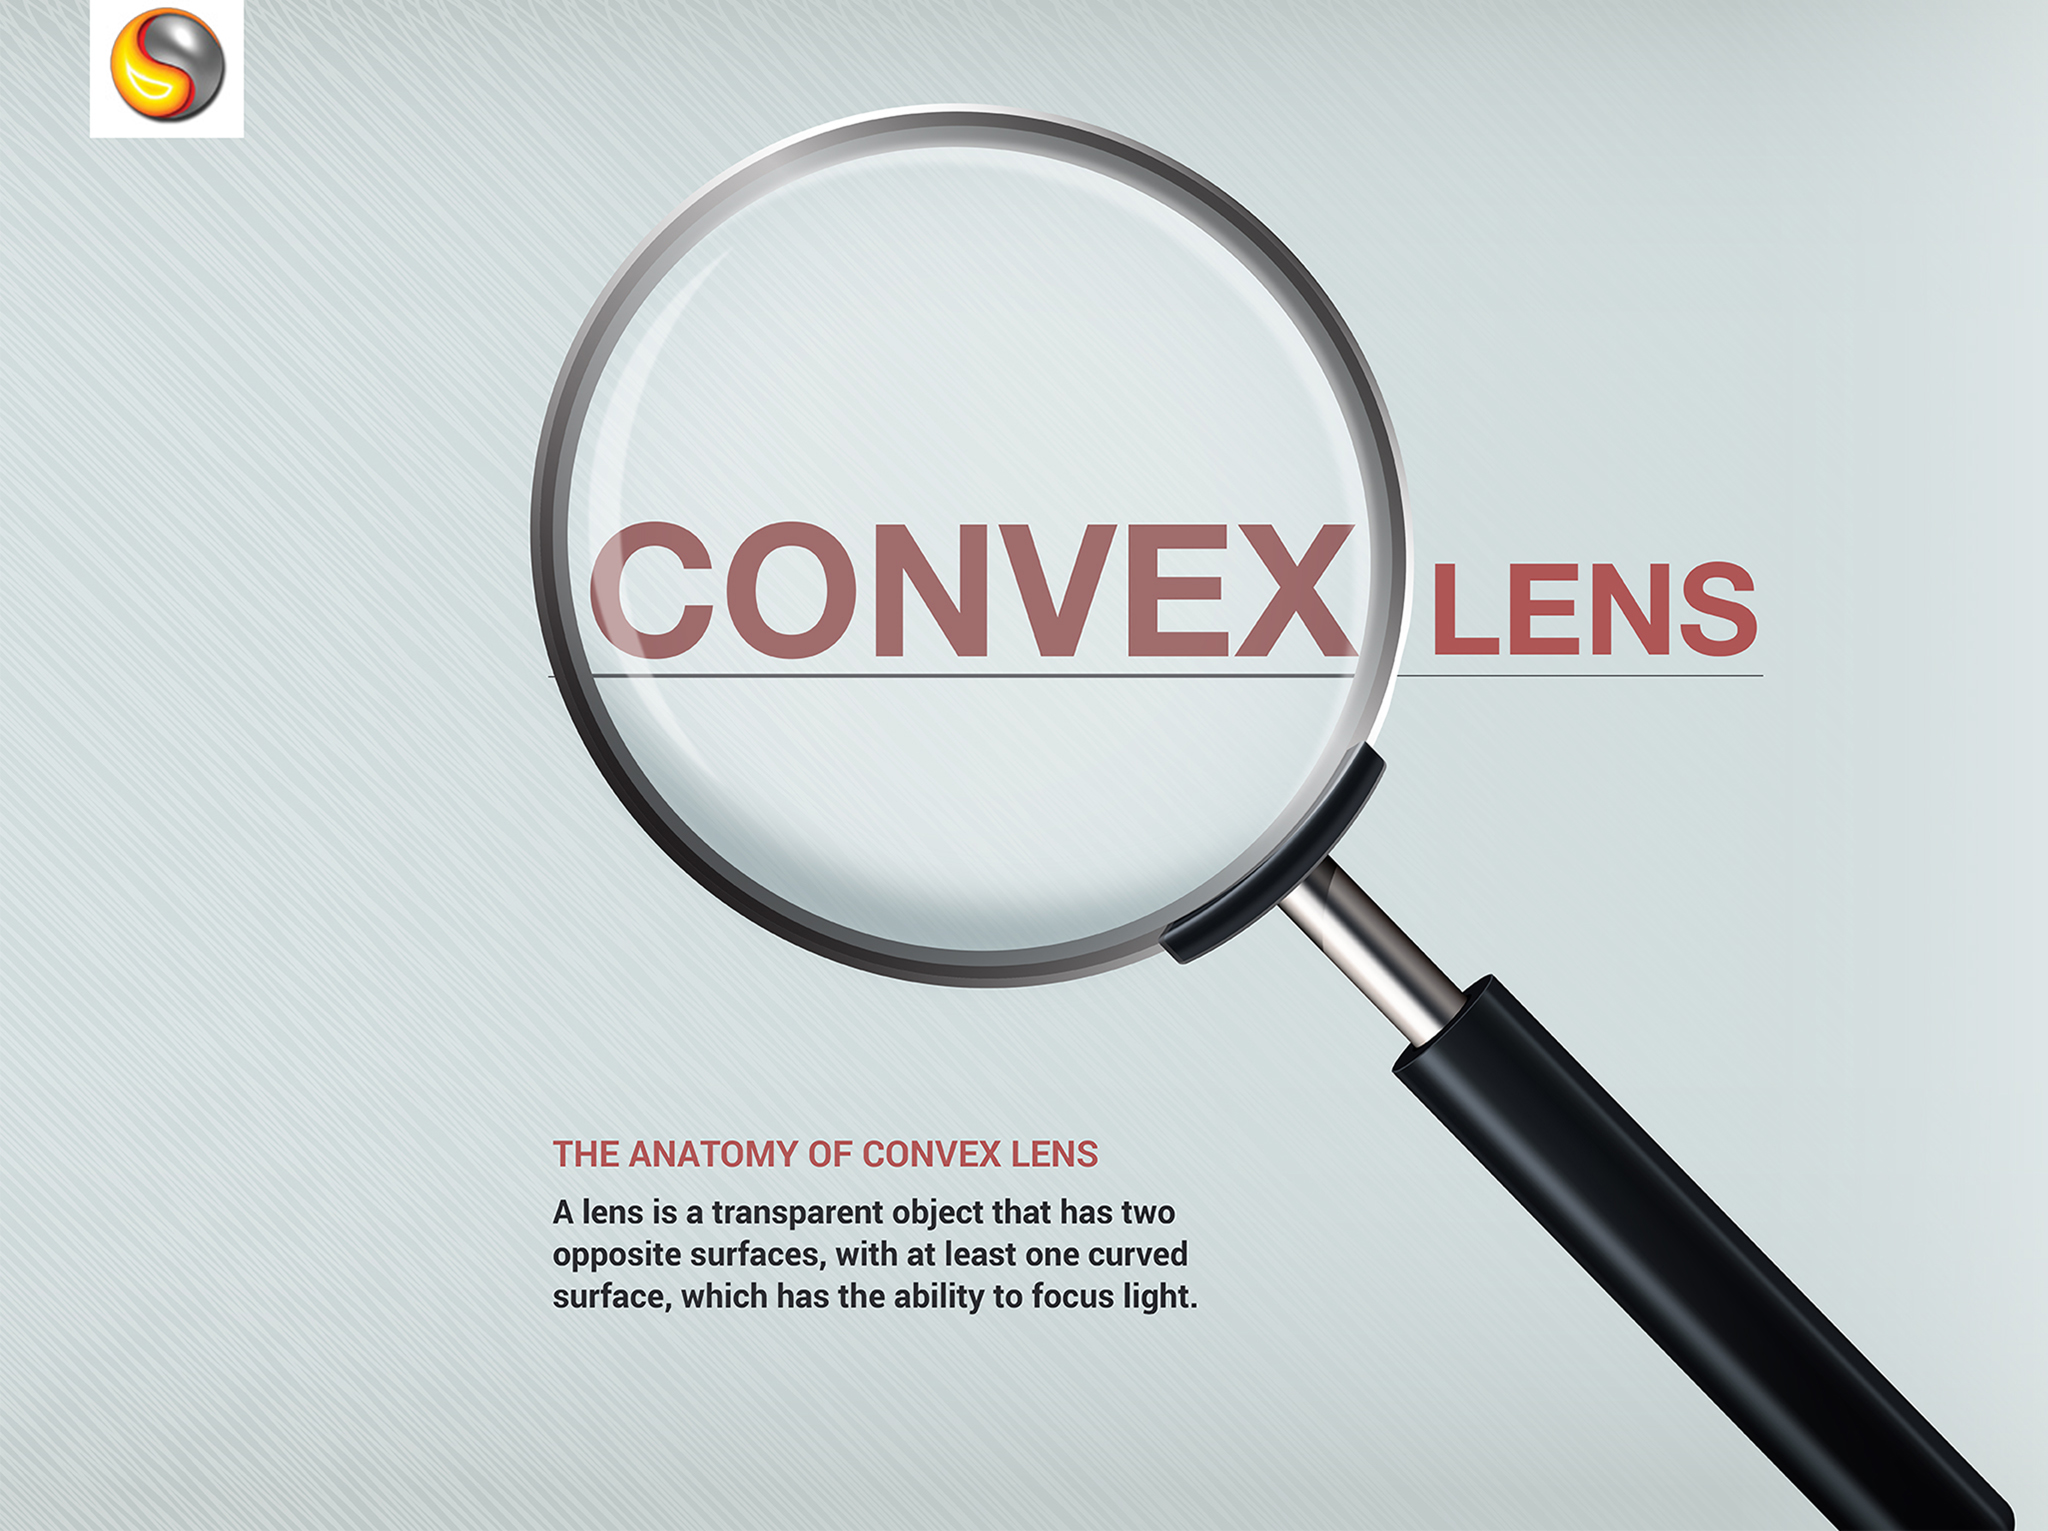 Feature of Convex Lens